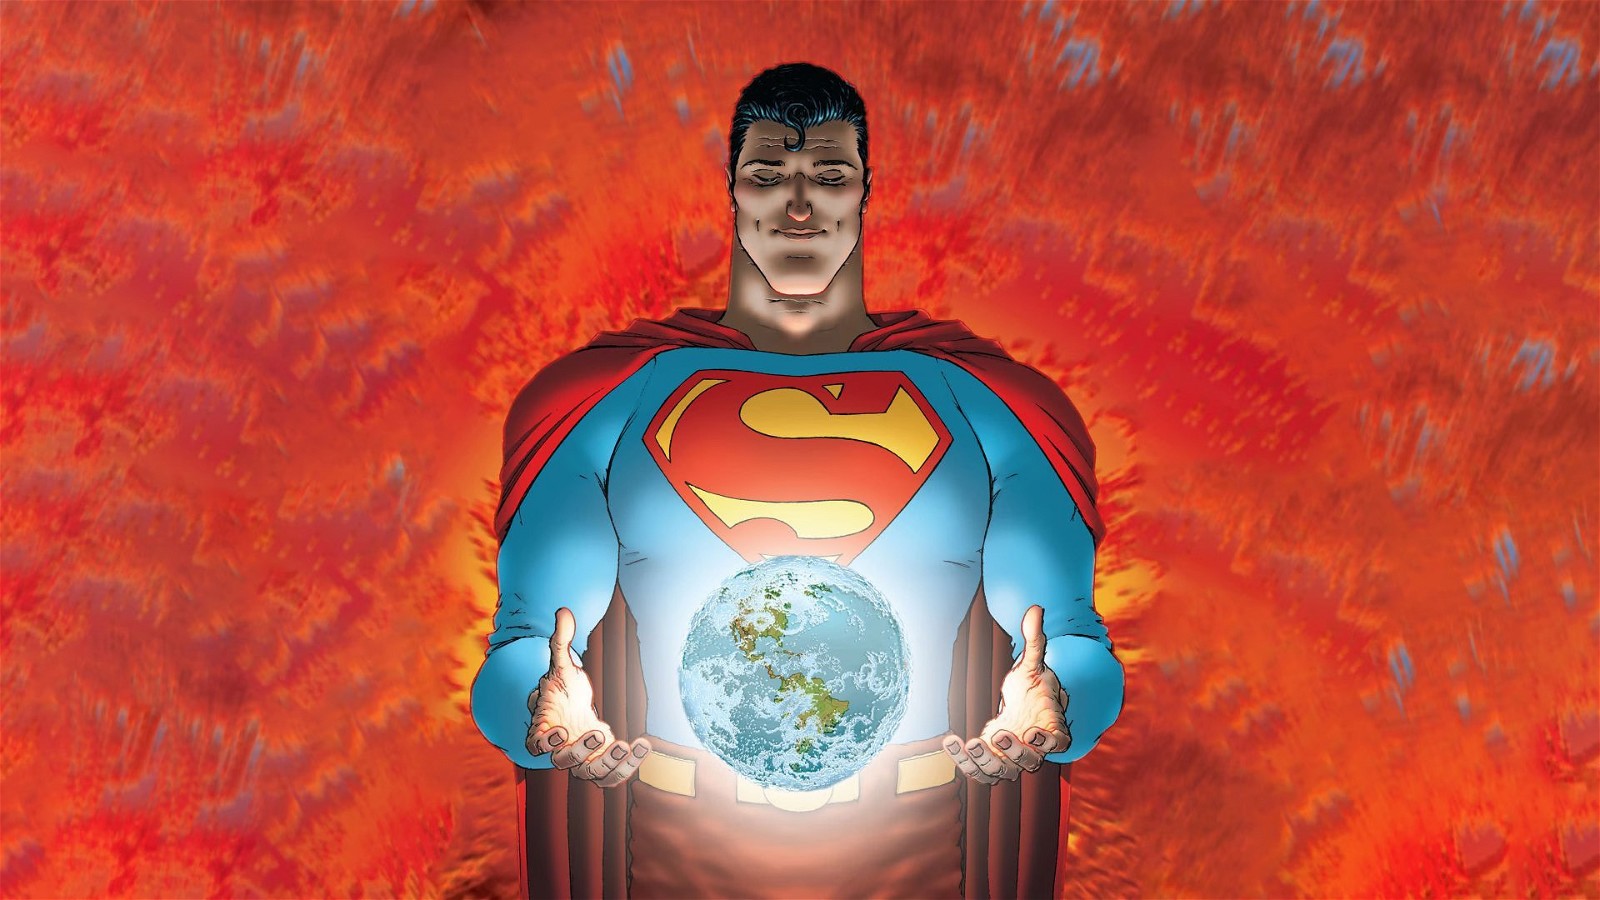 Superman will redefine the DCU